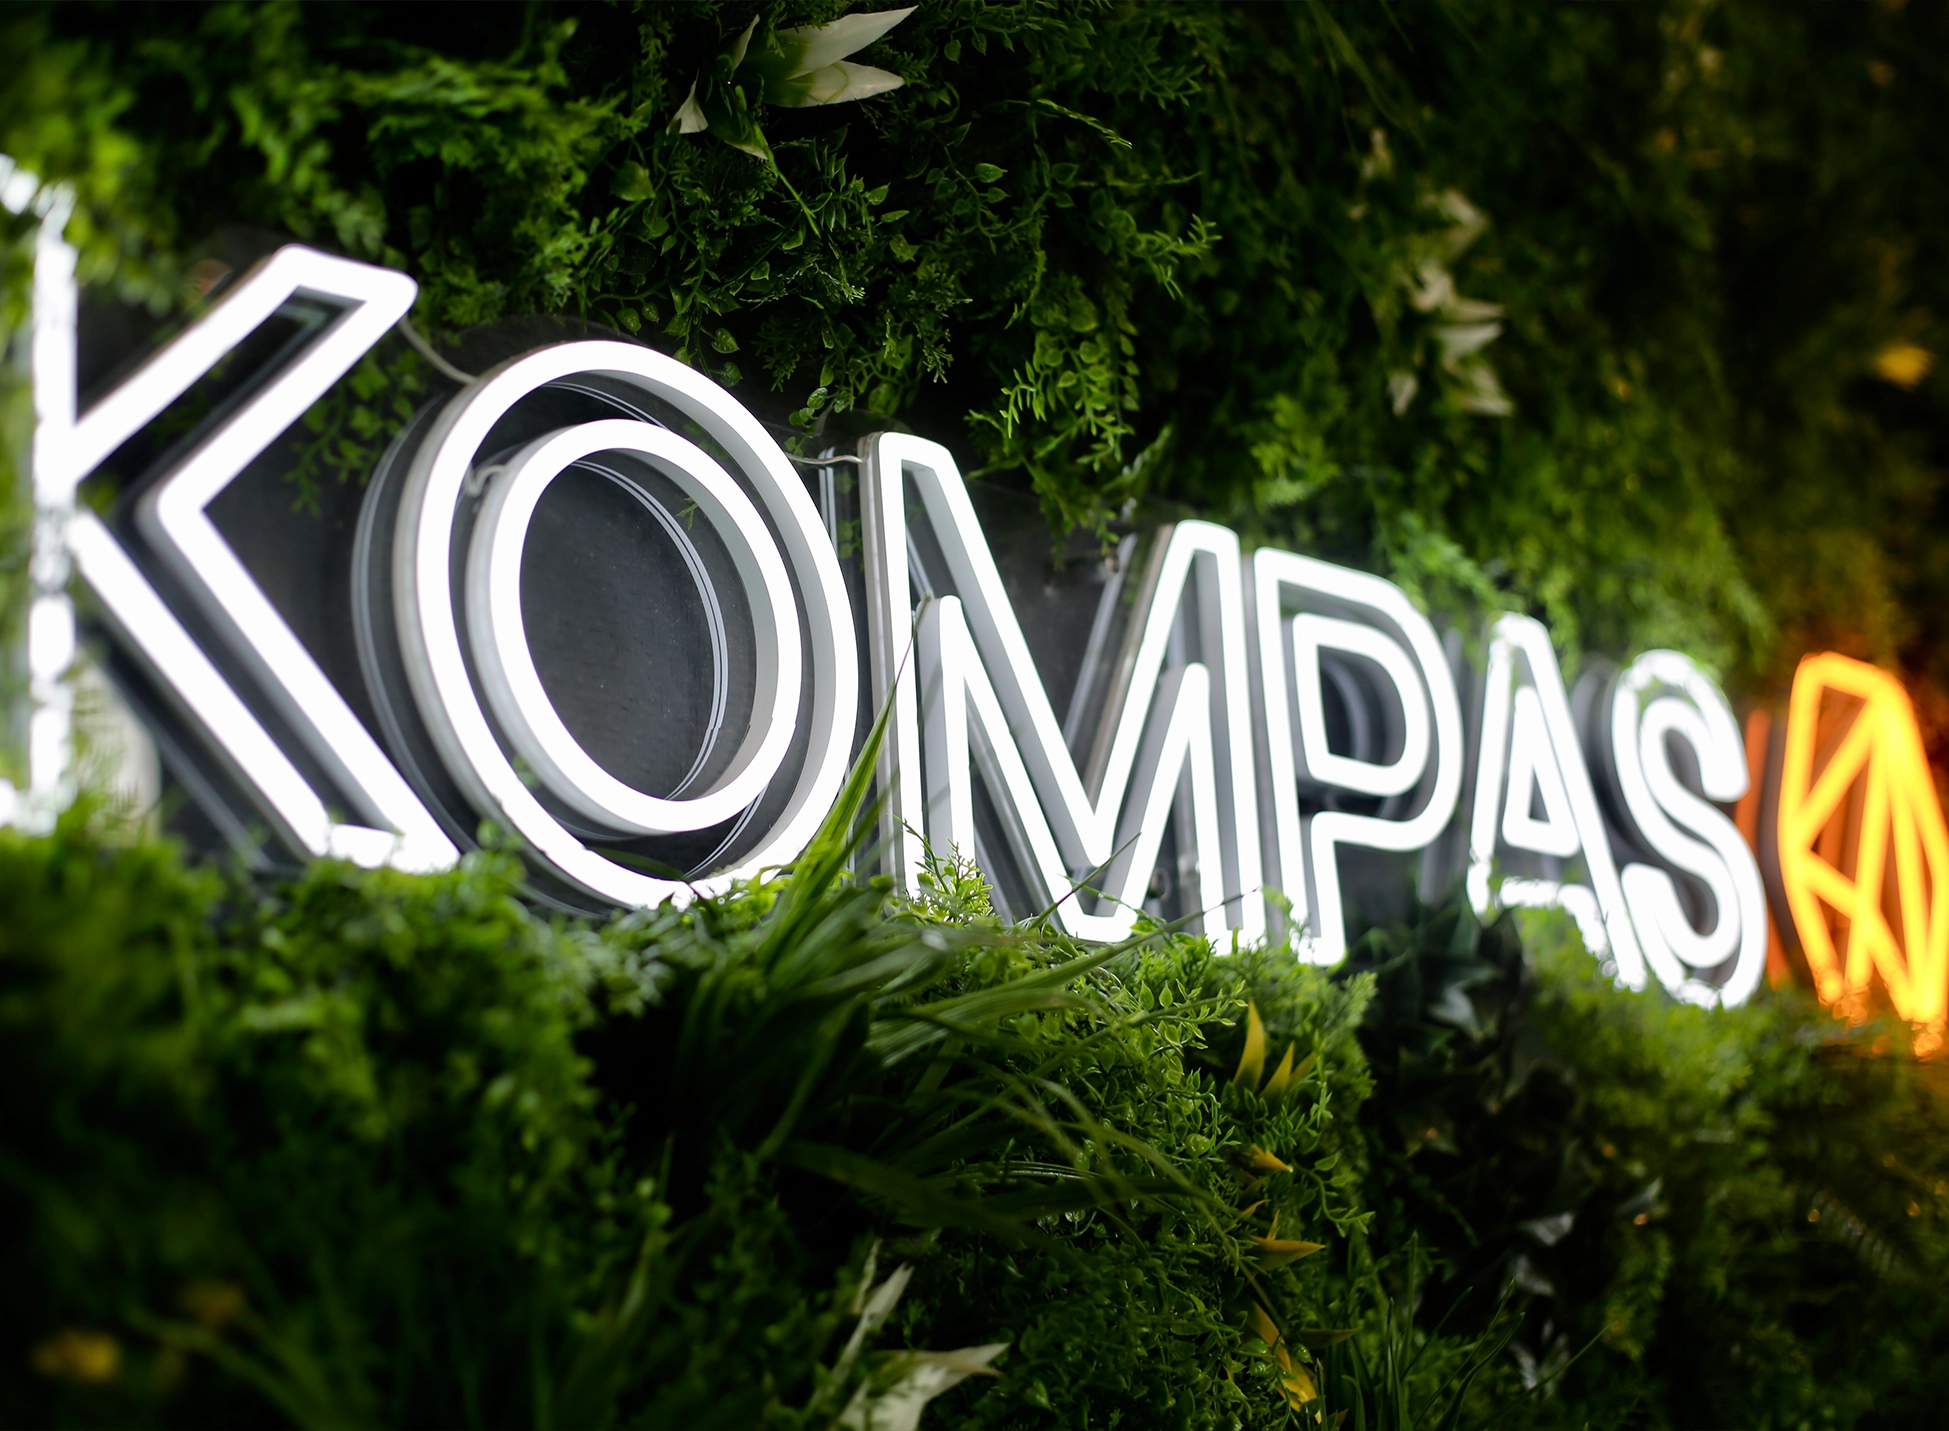 Kompas Publishing logo neon